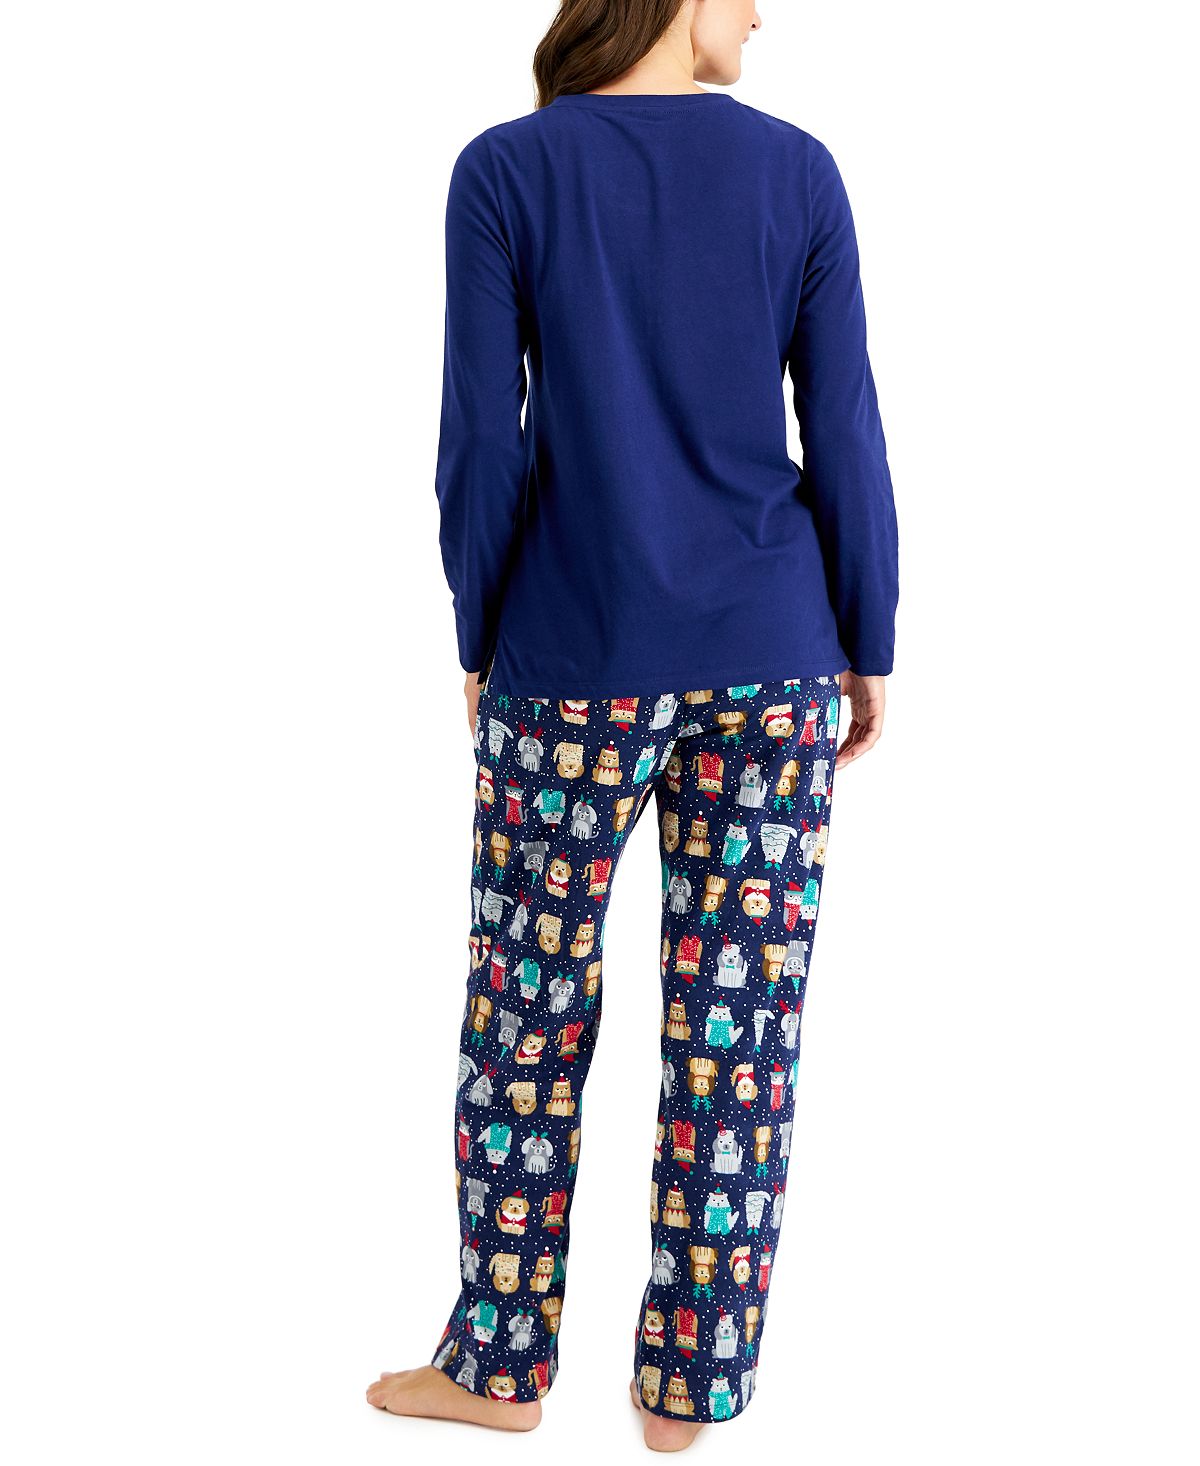 Family Pajamas Matching Wo Bah Humbug Novelty Family Pajama Set Bah Humbug